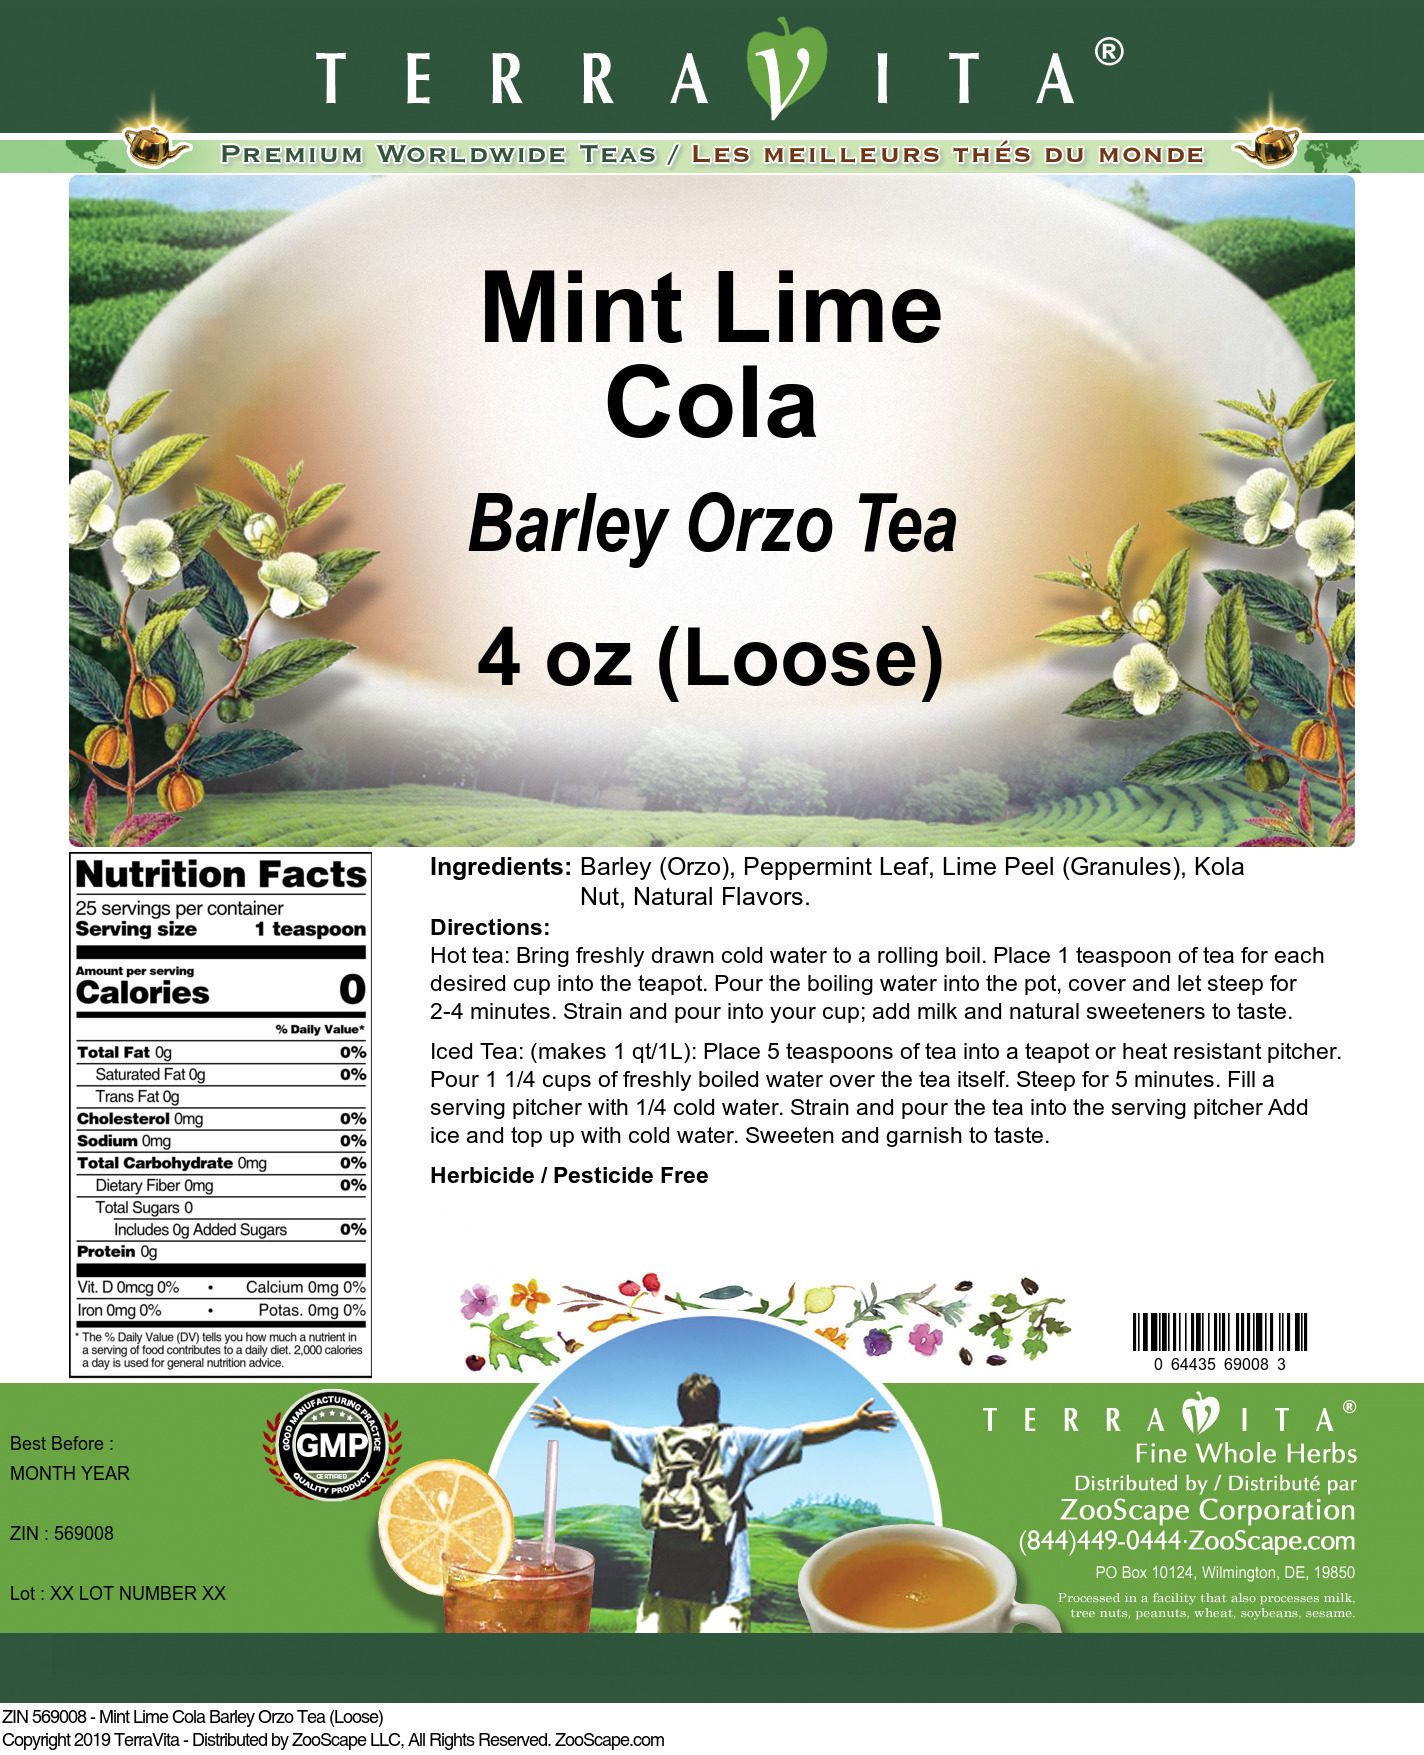 Mint Lime Cola Barley Orzo Tea (Loose) - Label